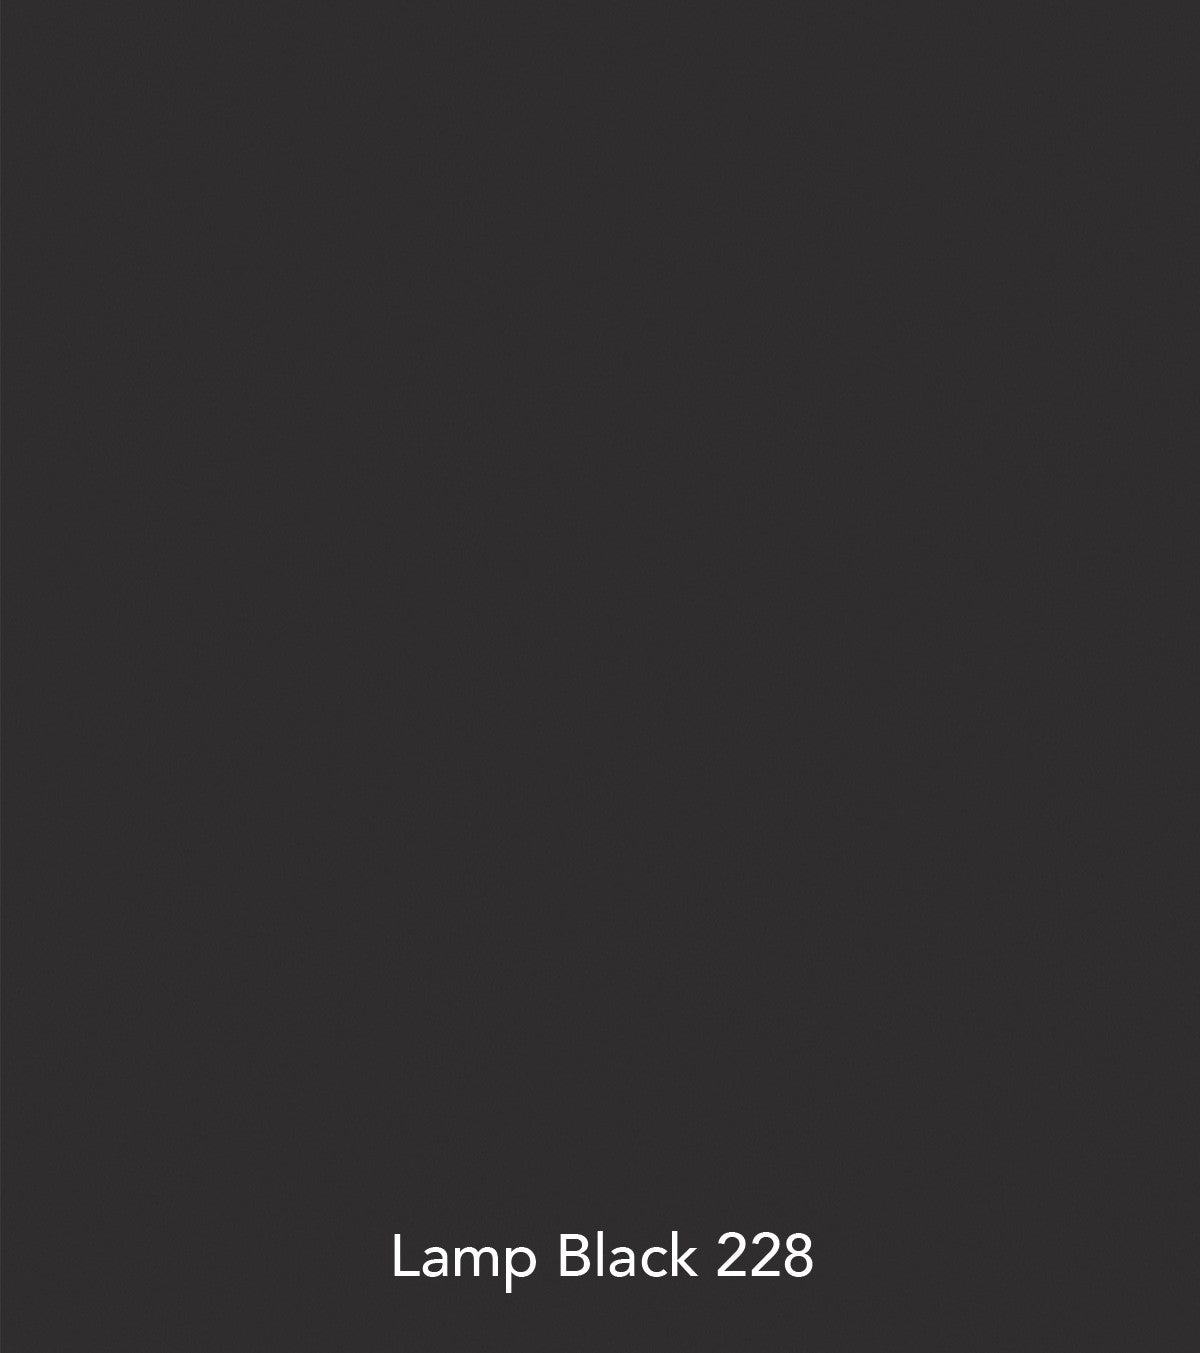 Peinture Little Greene - Lamp Black (228)